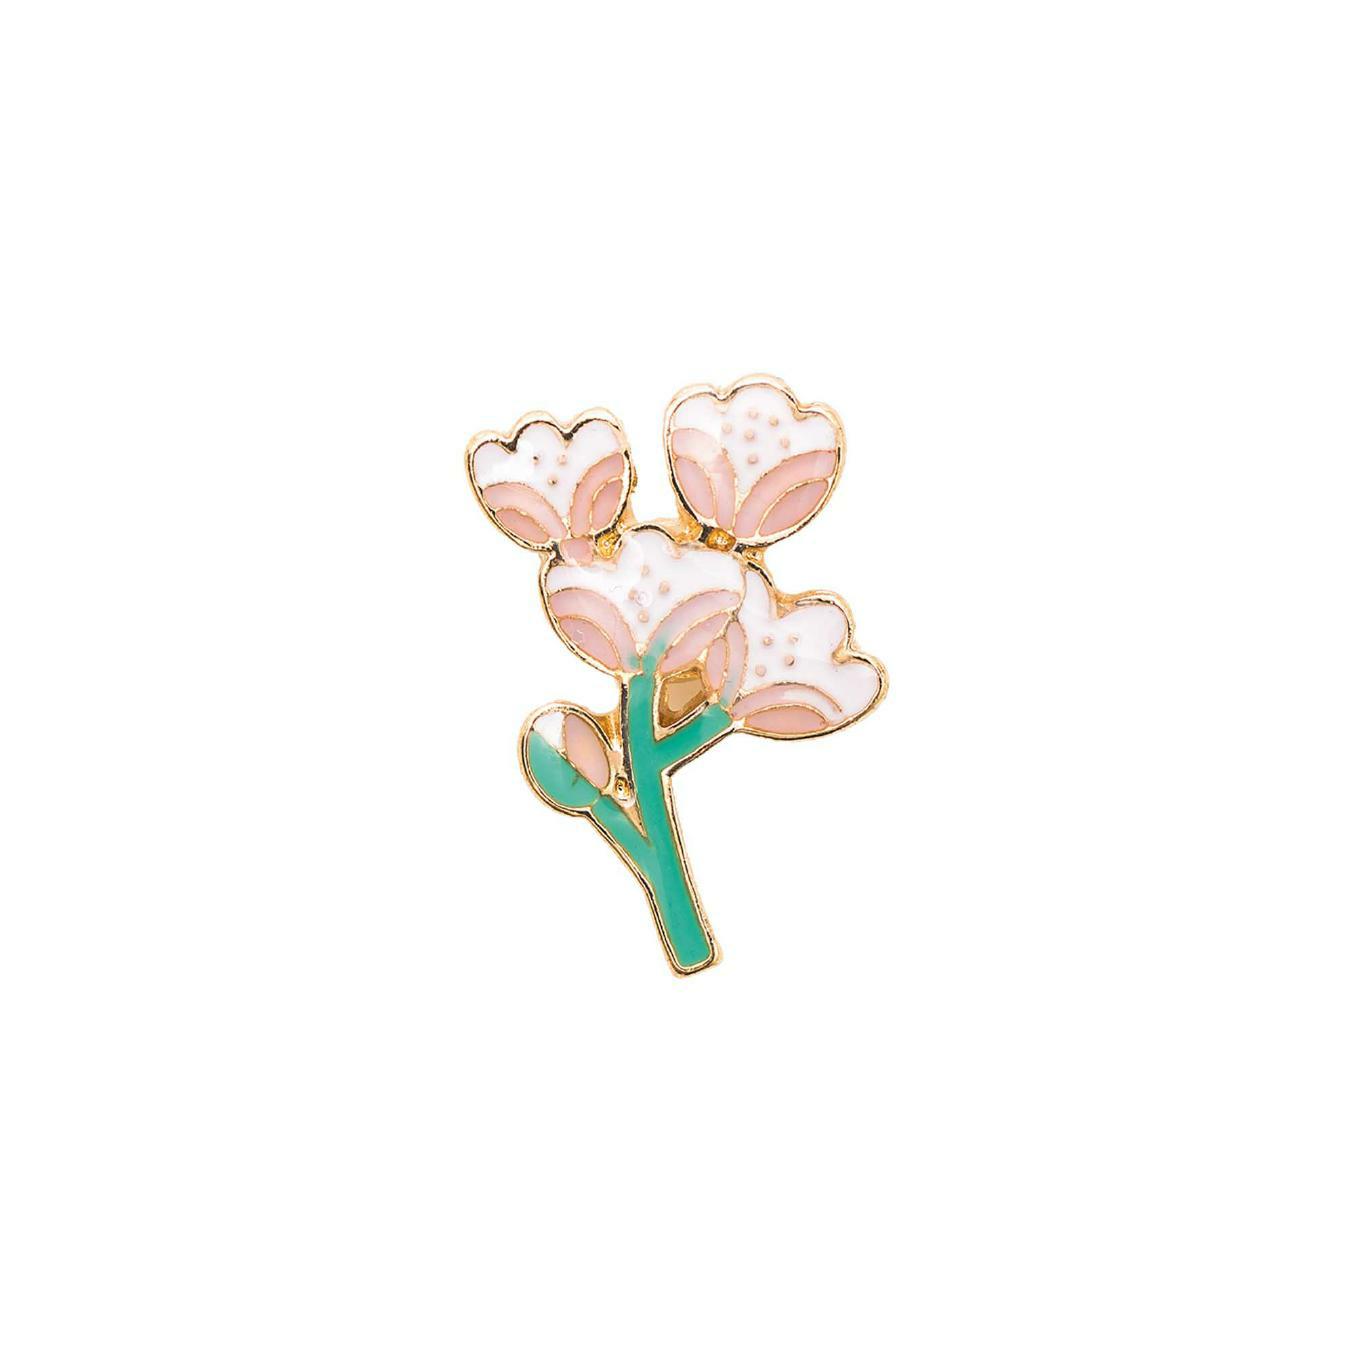 rico - Emailbrosche/Pin - "Cherry Blossom" - 12x18